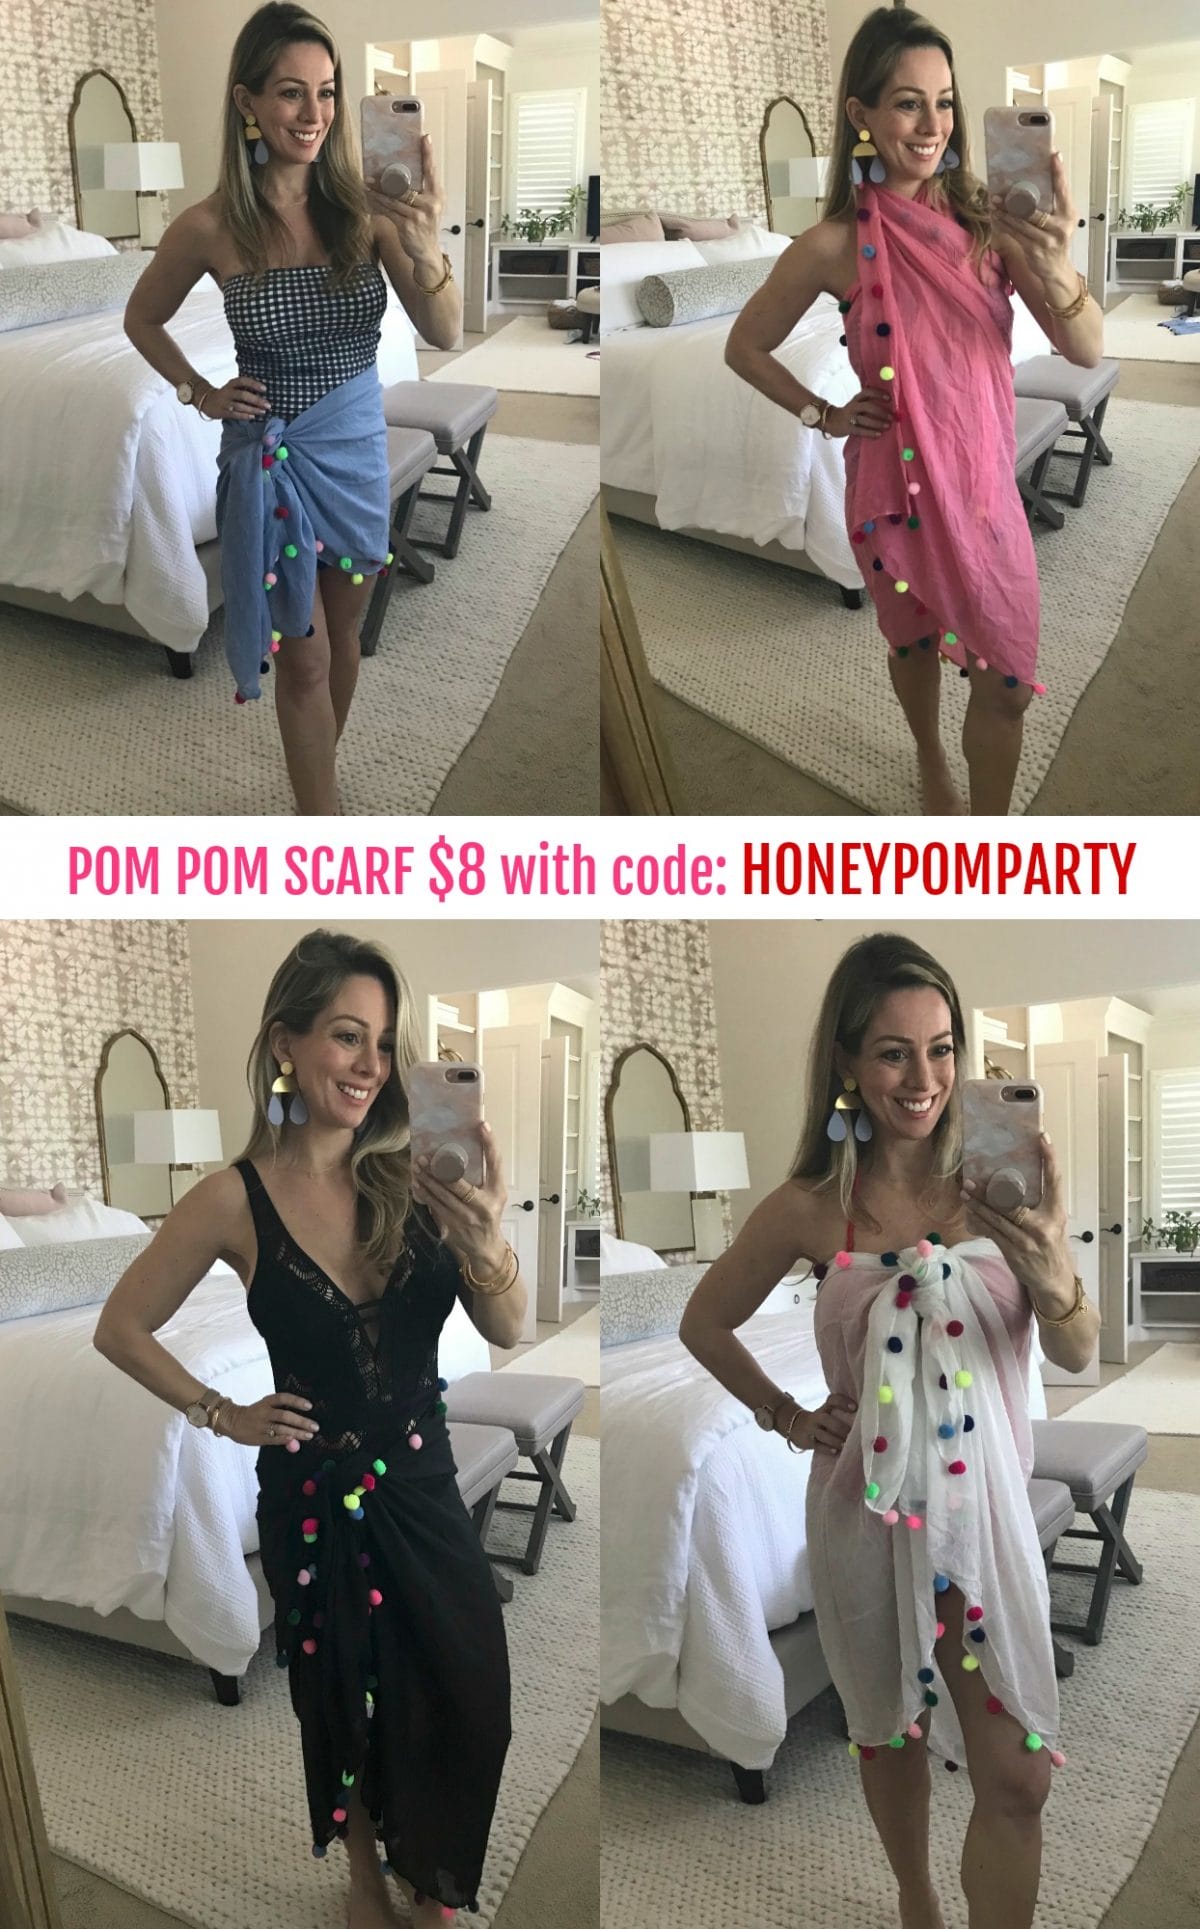 pom pom scarf $8 with code HONEYPOMPARTY